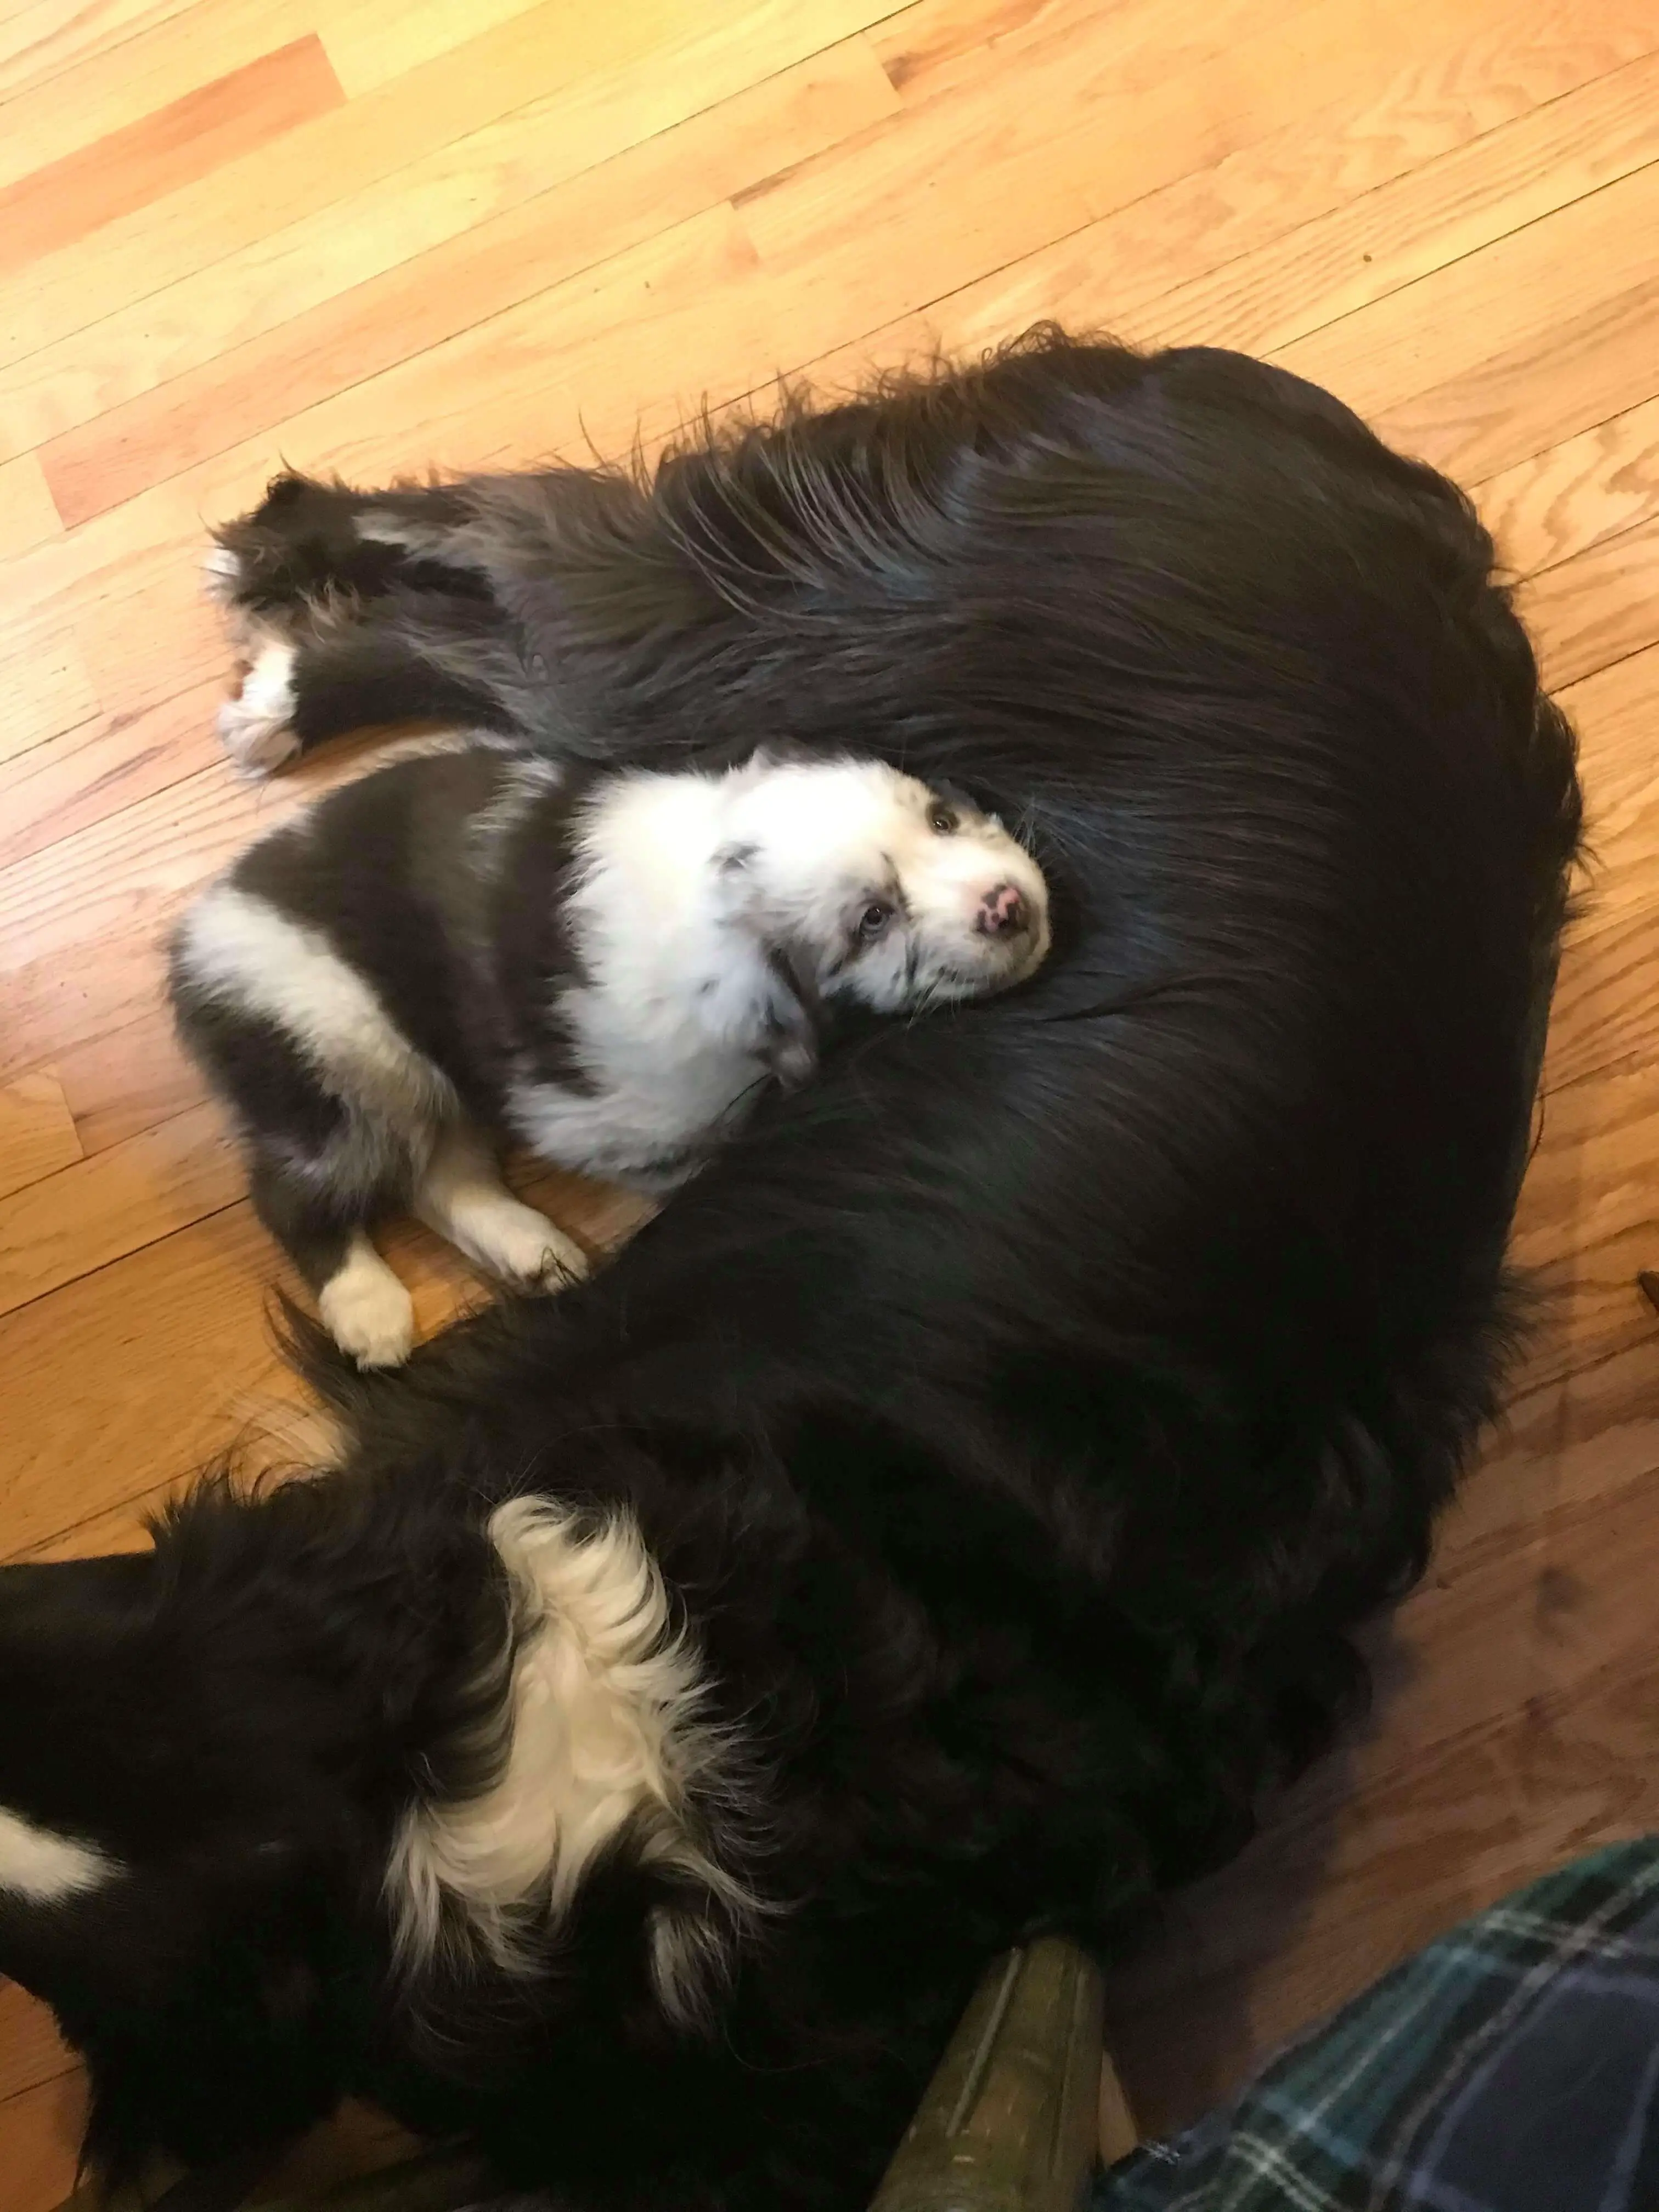 An Australian Shepard puppy snuggled up to an adult Australian Shepard